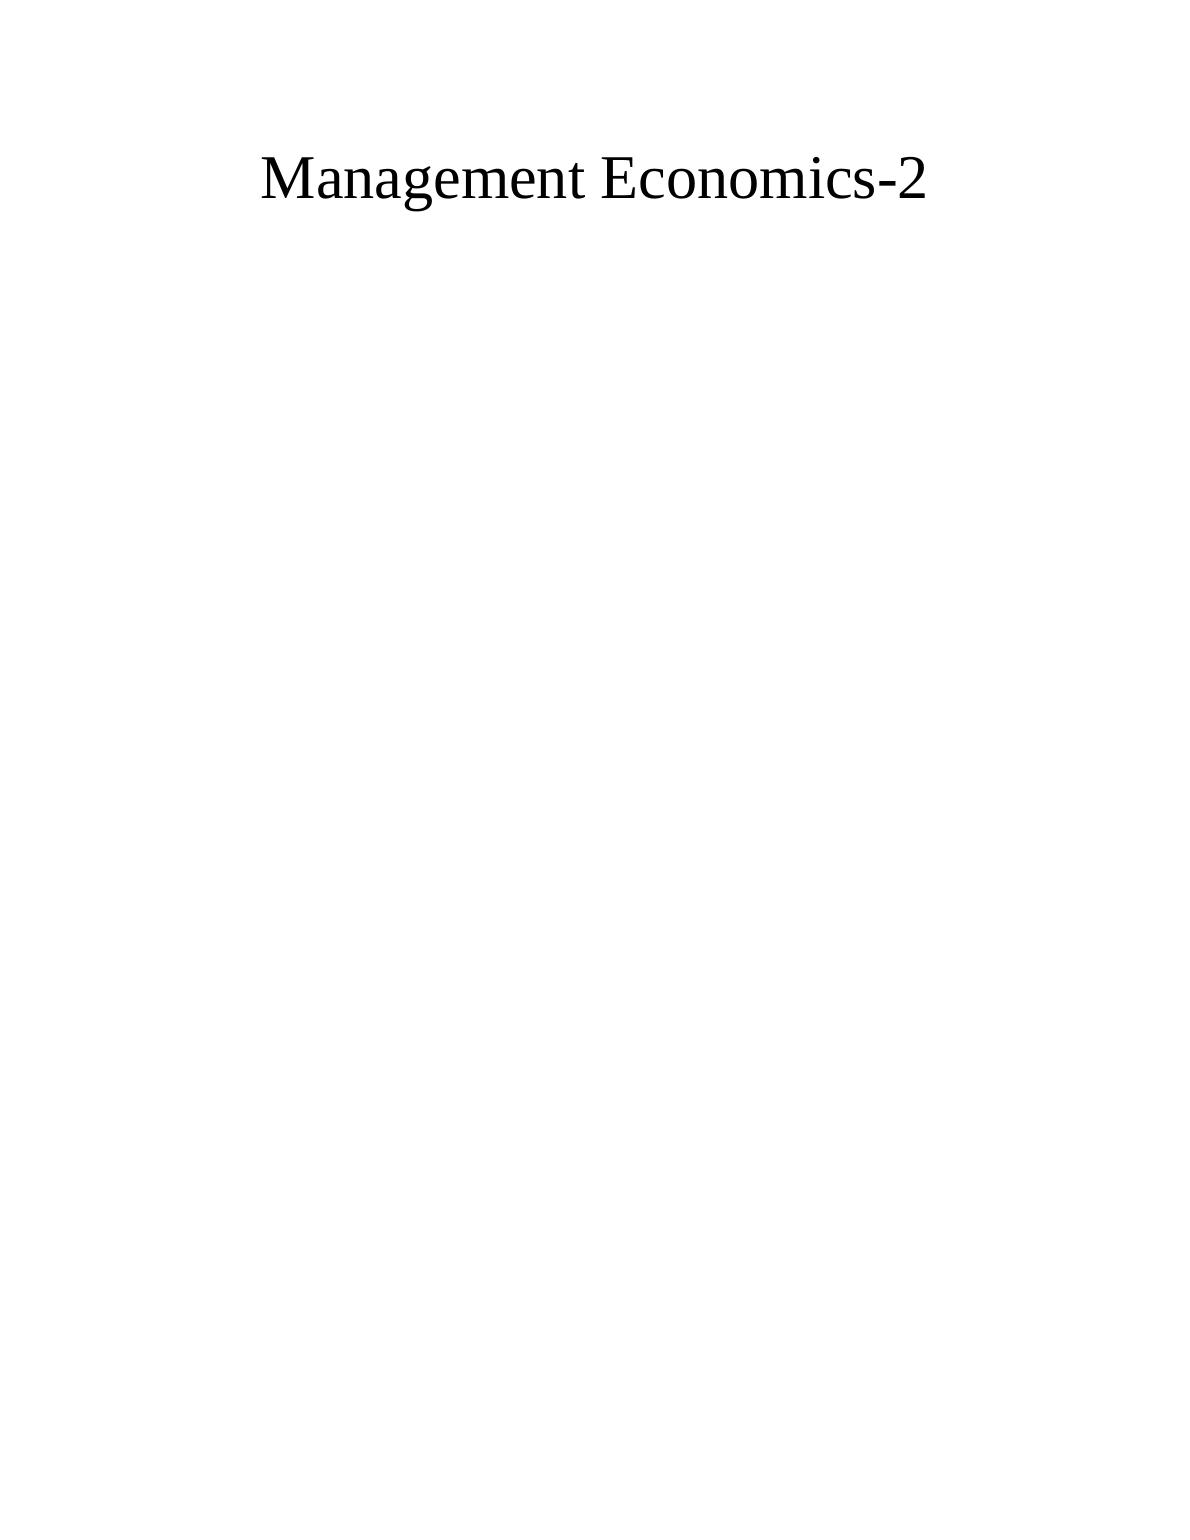 Management Economics-2_1